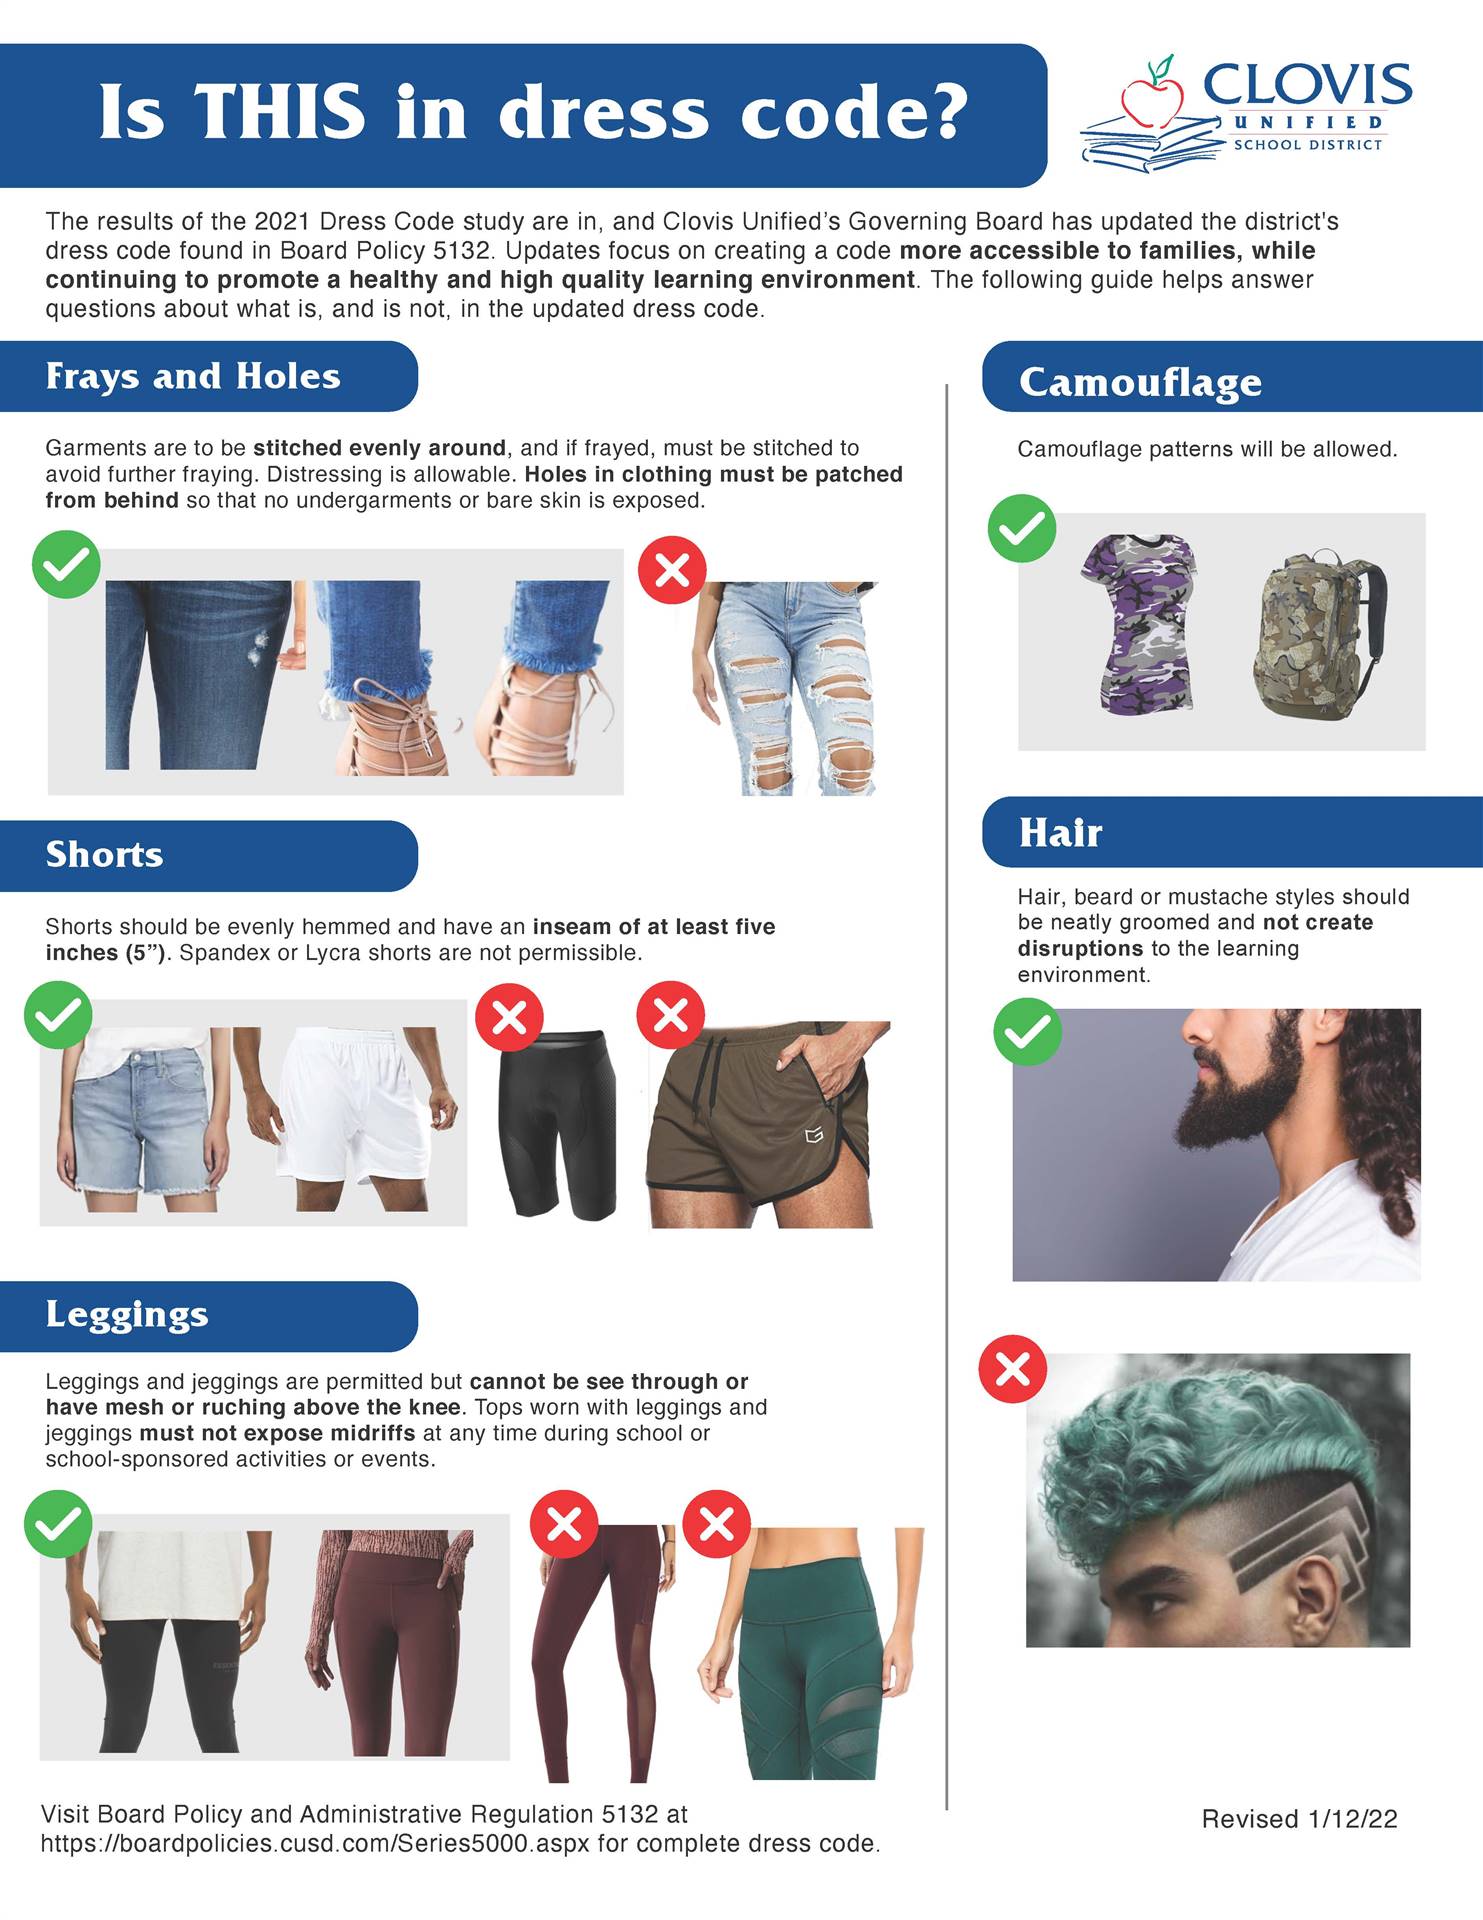 Dress Code Examples - Full text downloadable below